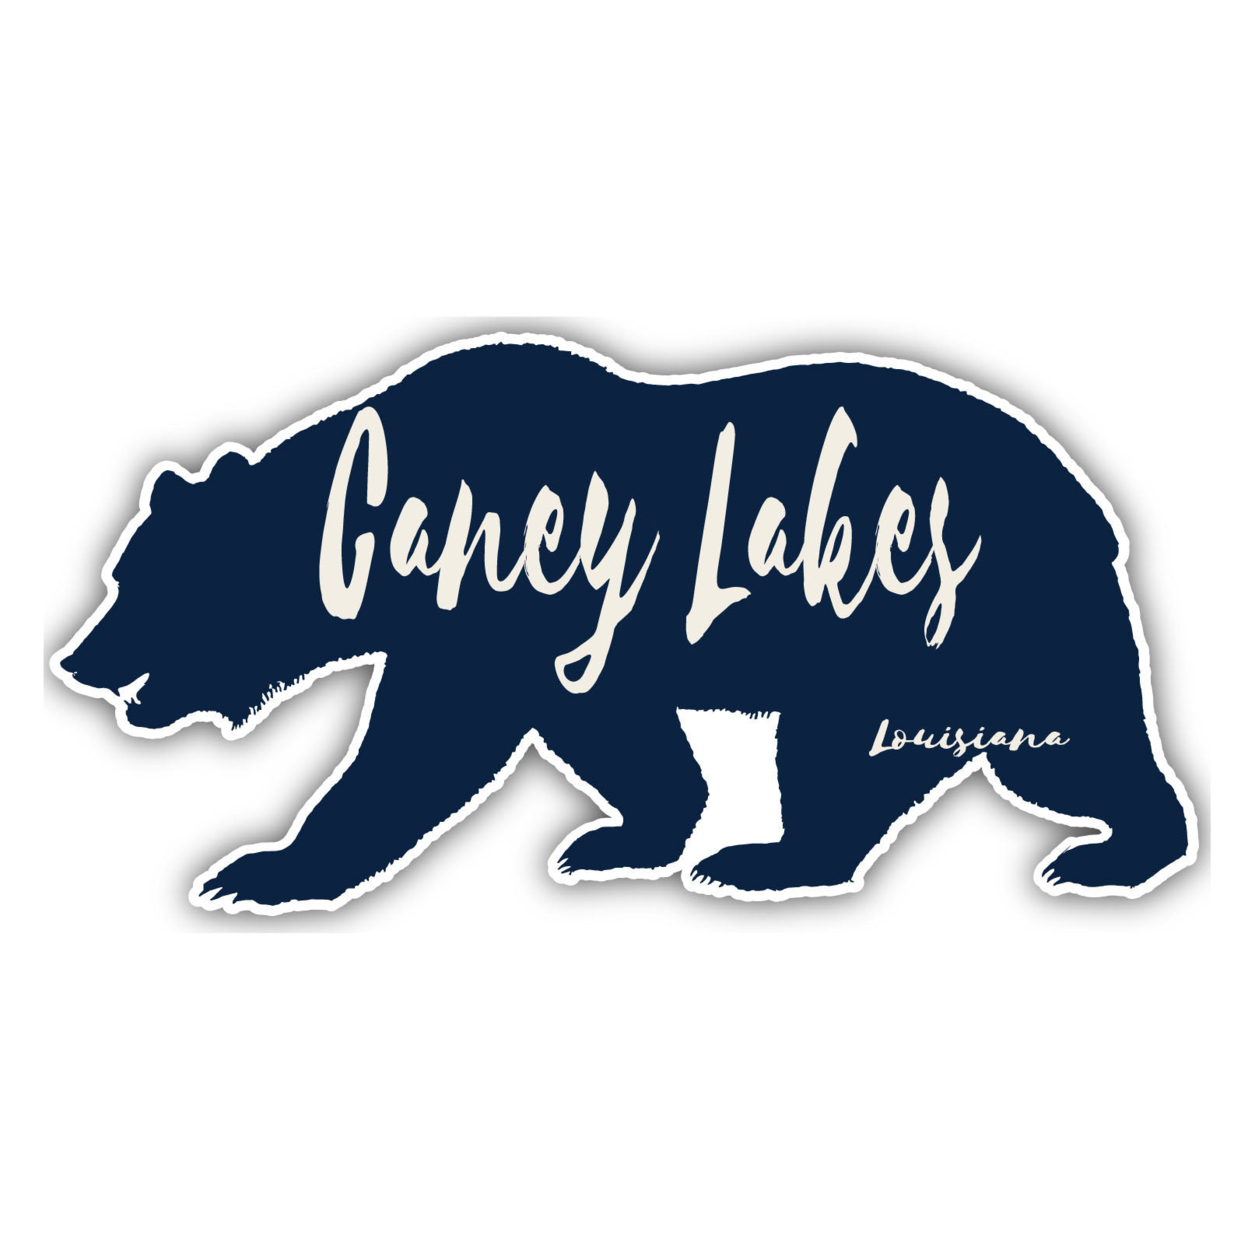 Caney Lakes Louisiana Souvenir Decorative Stickers (Choose Theme And Size) - Single Unit, 4-Inch, Bear